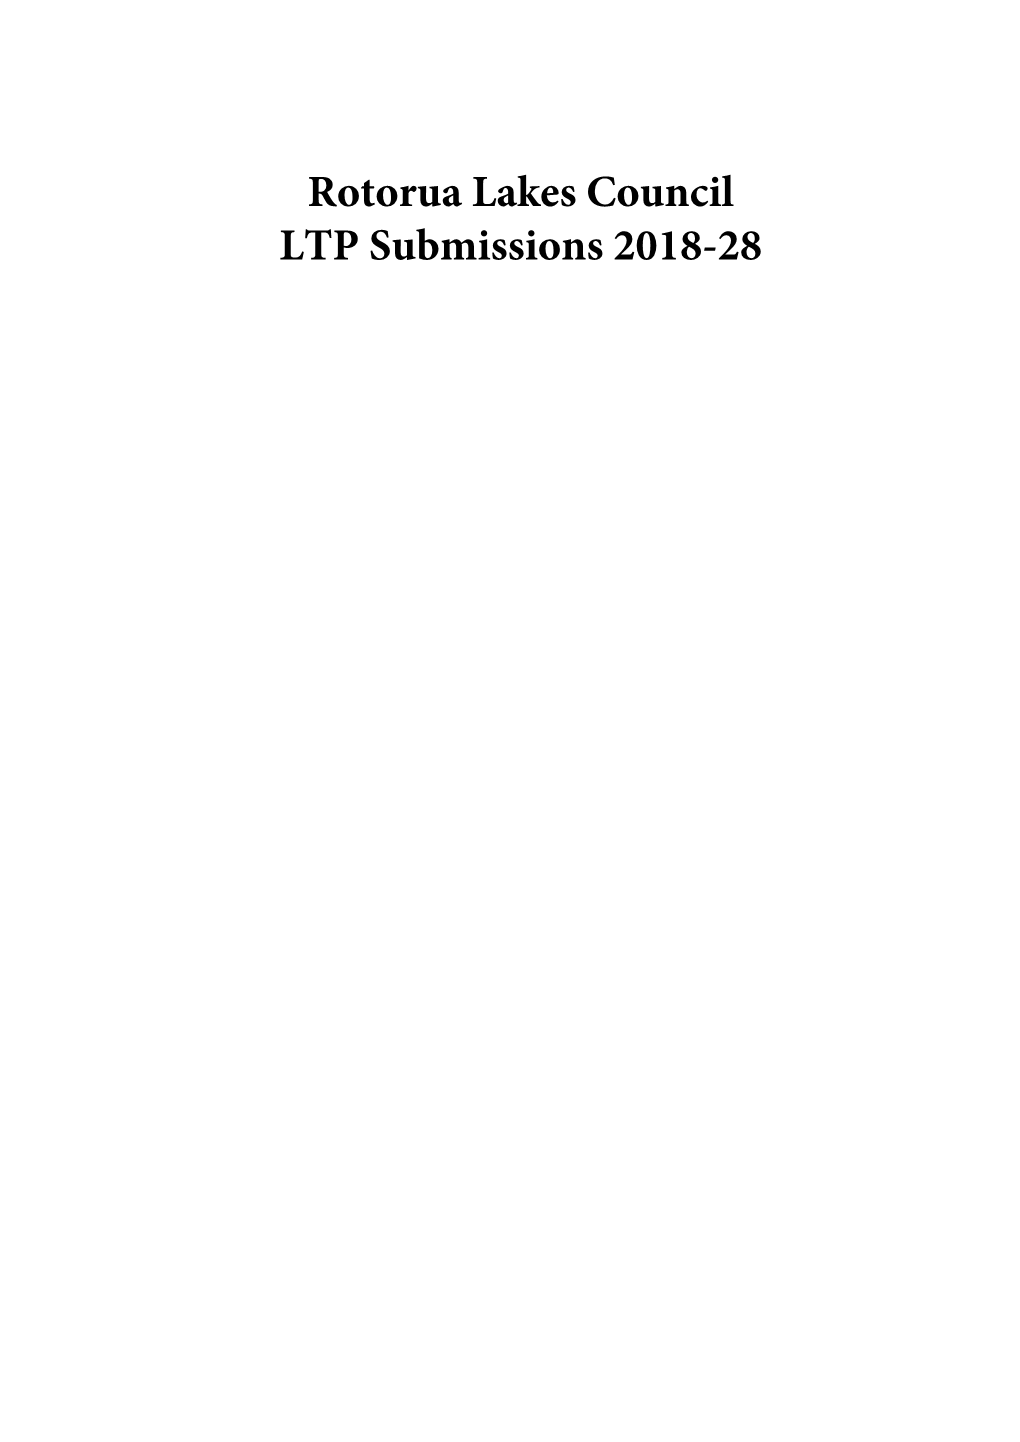 Rotorua Lakes Council LTP Submissions 2018-28 1